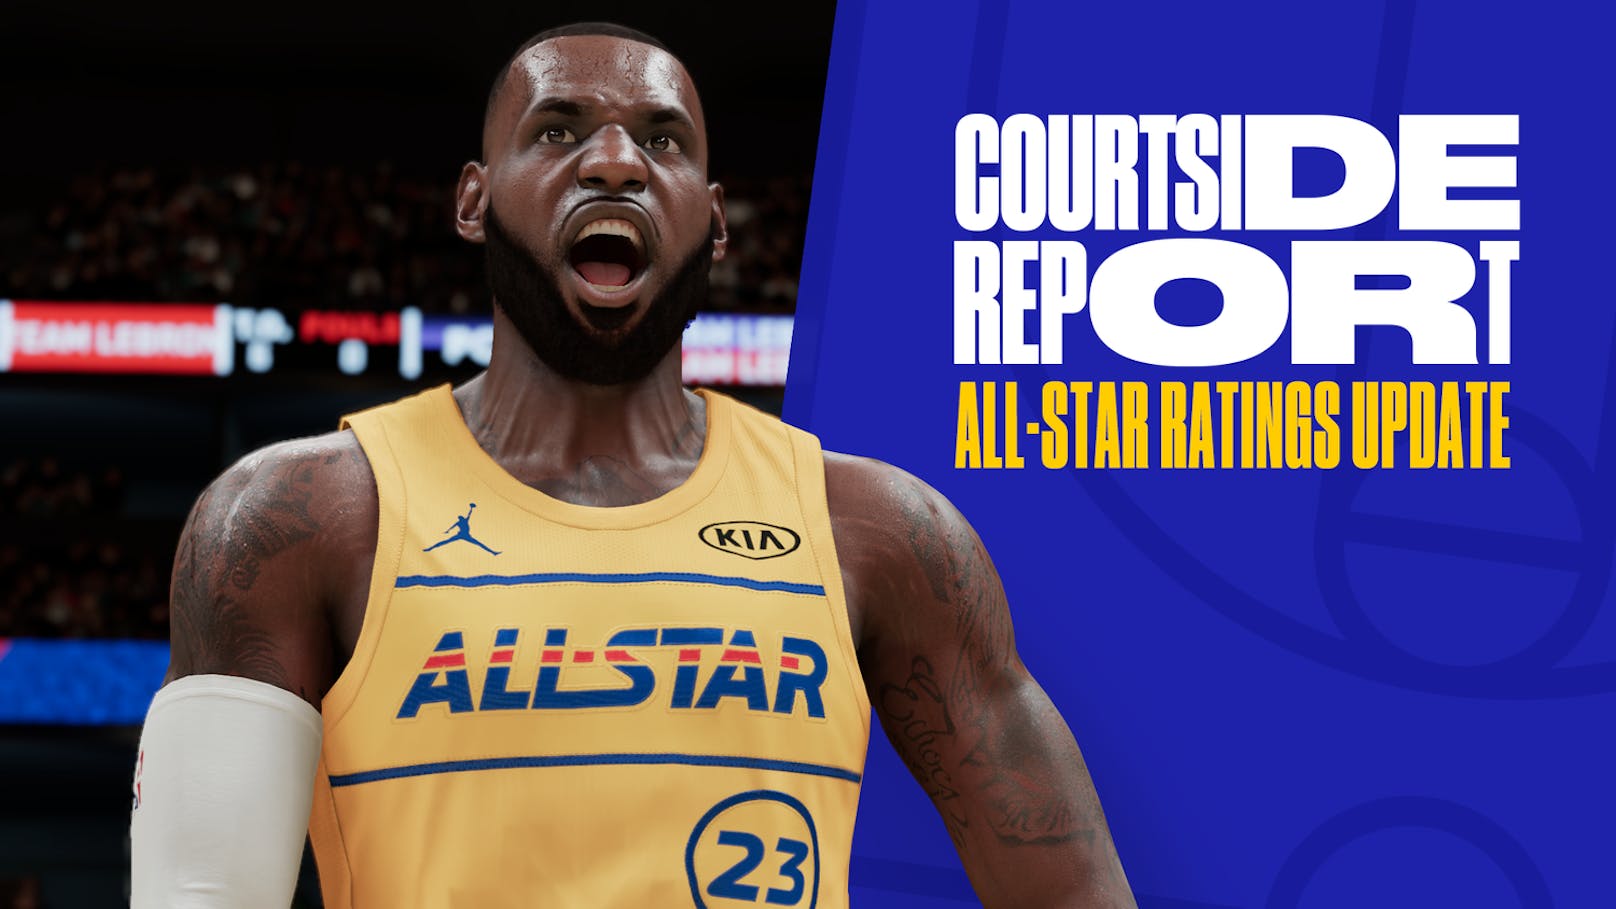 NBA All-Star Weekend NBA 2K21 Courtside Report.